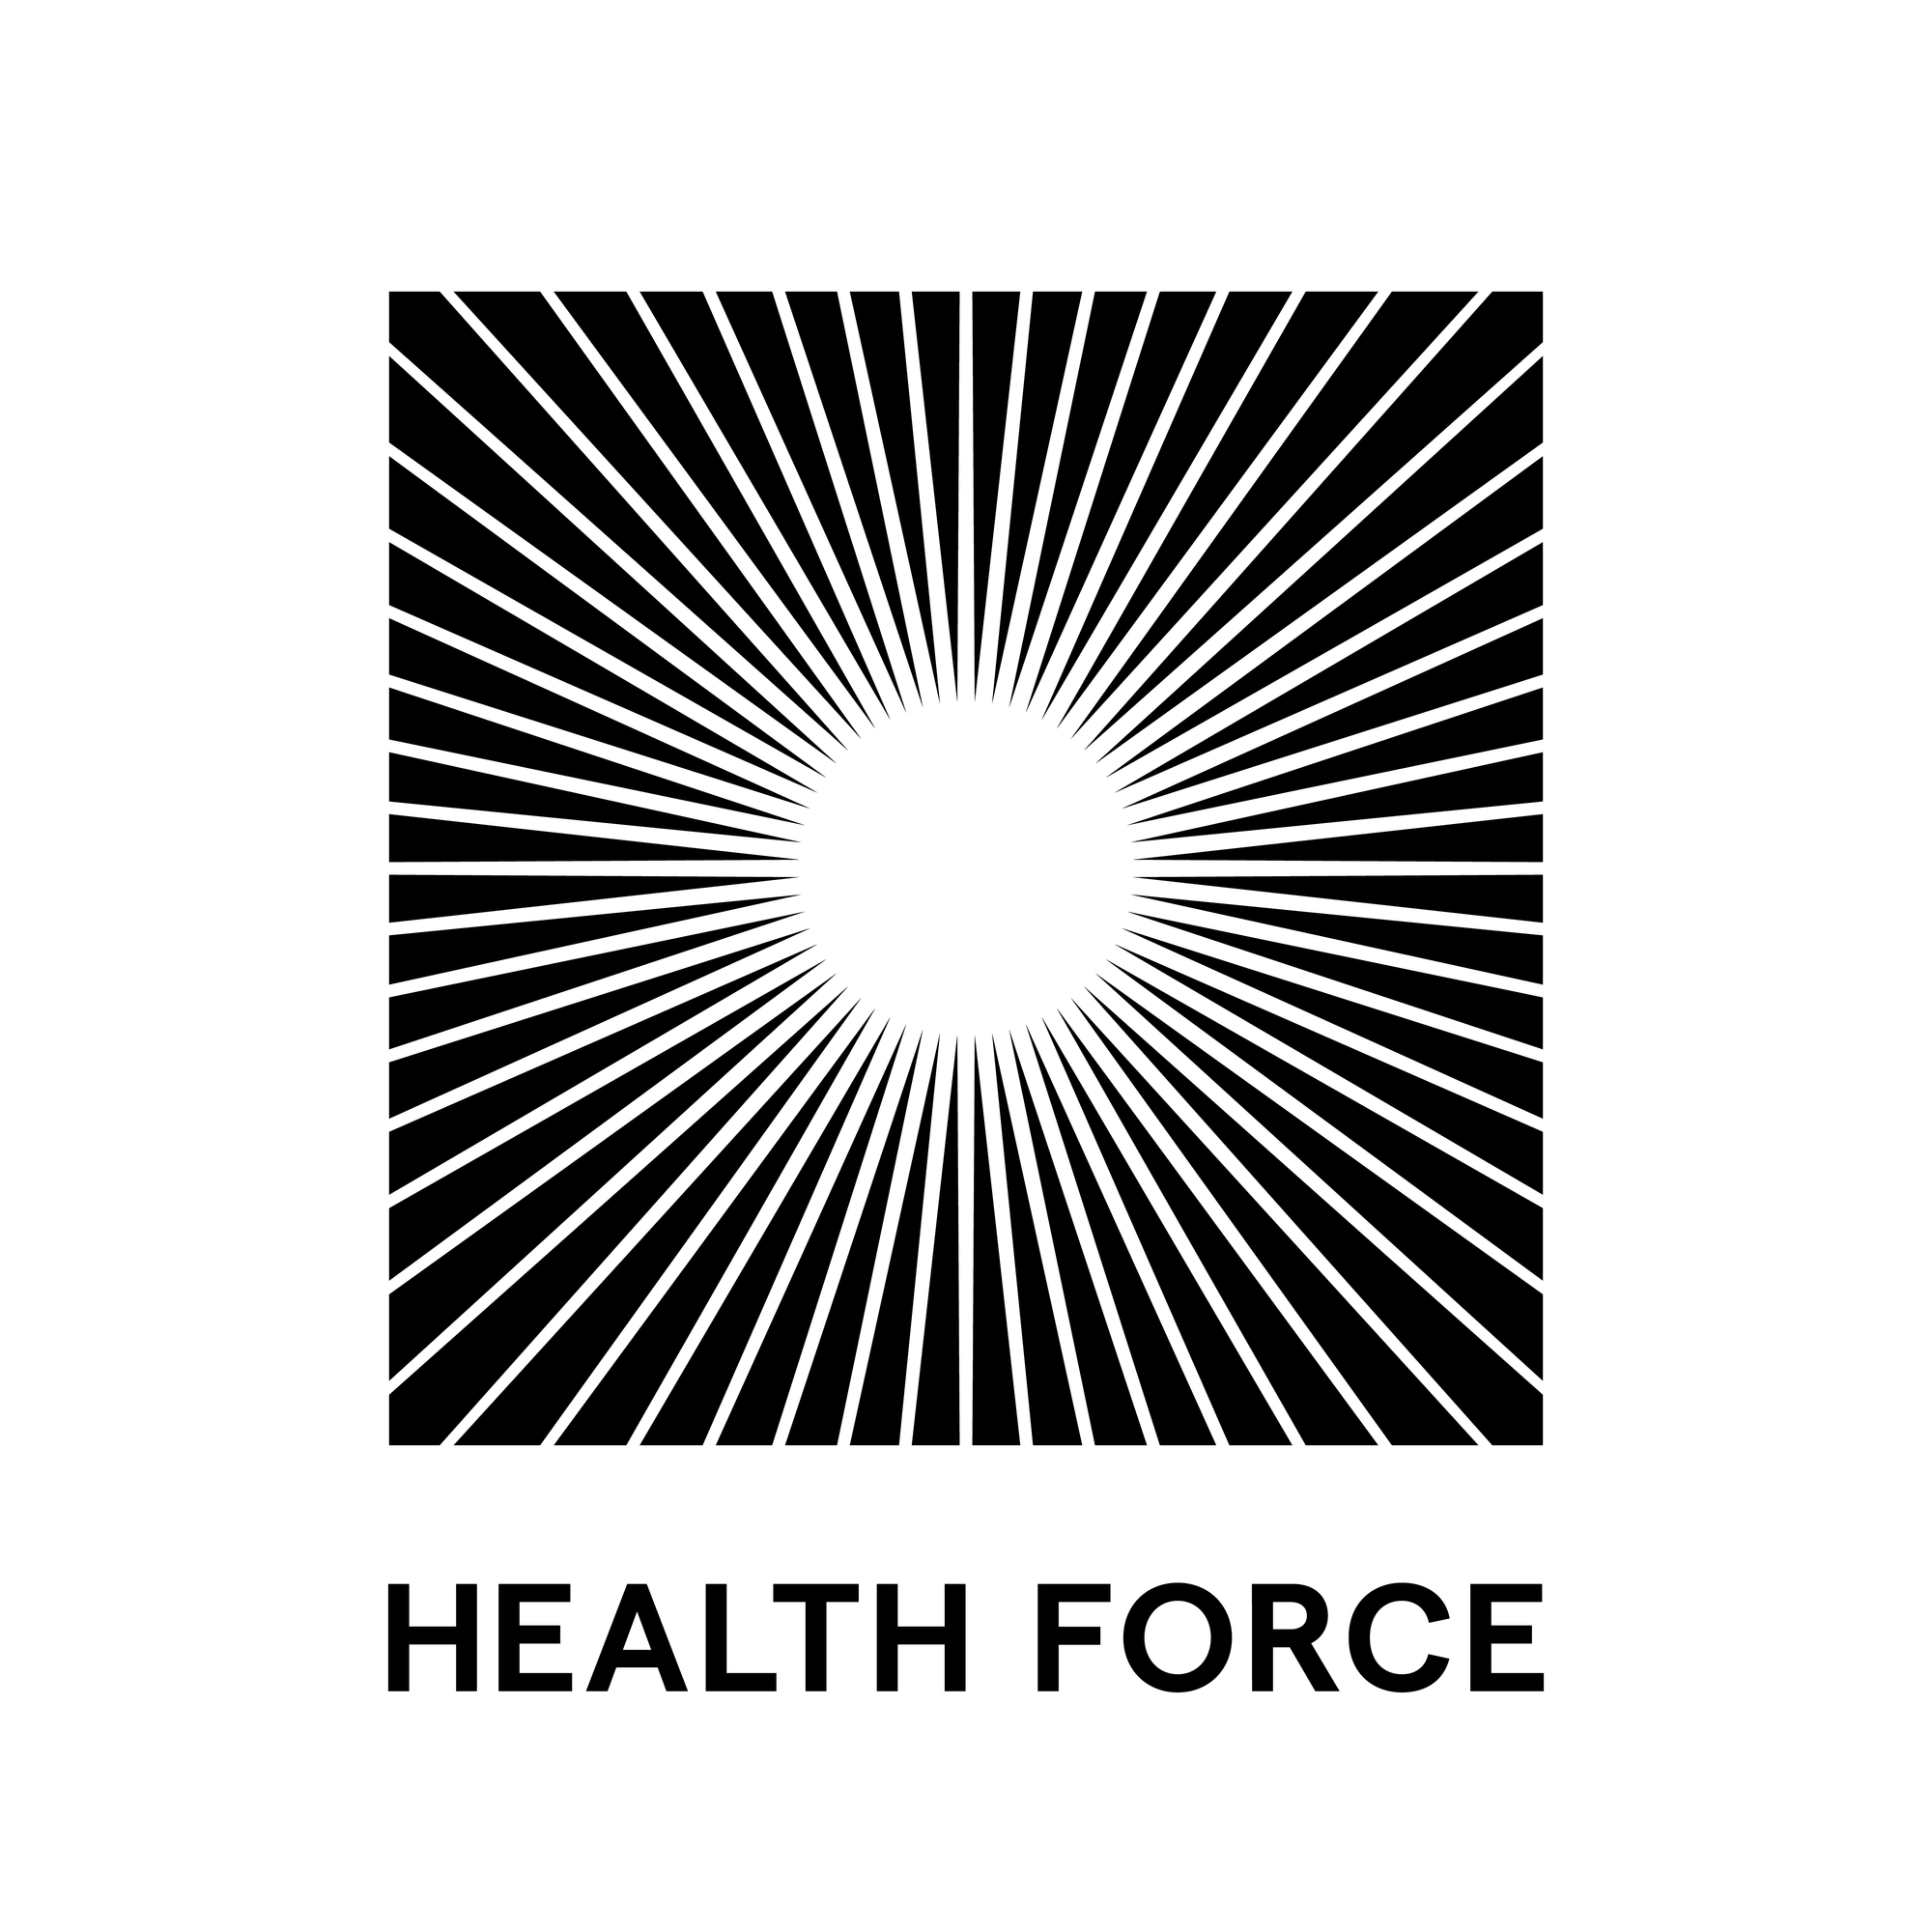 Health Force - Job Board